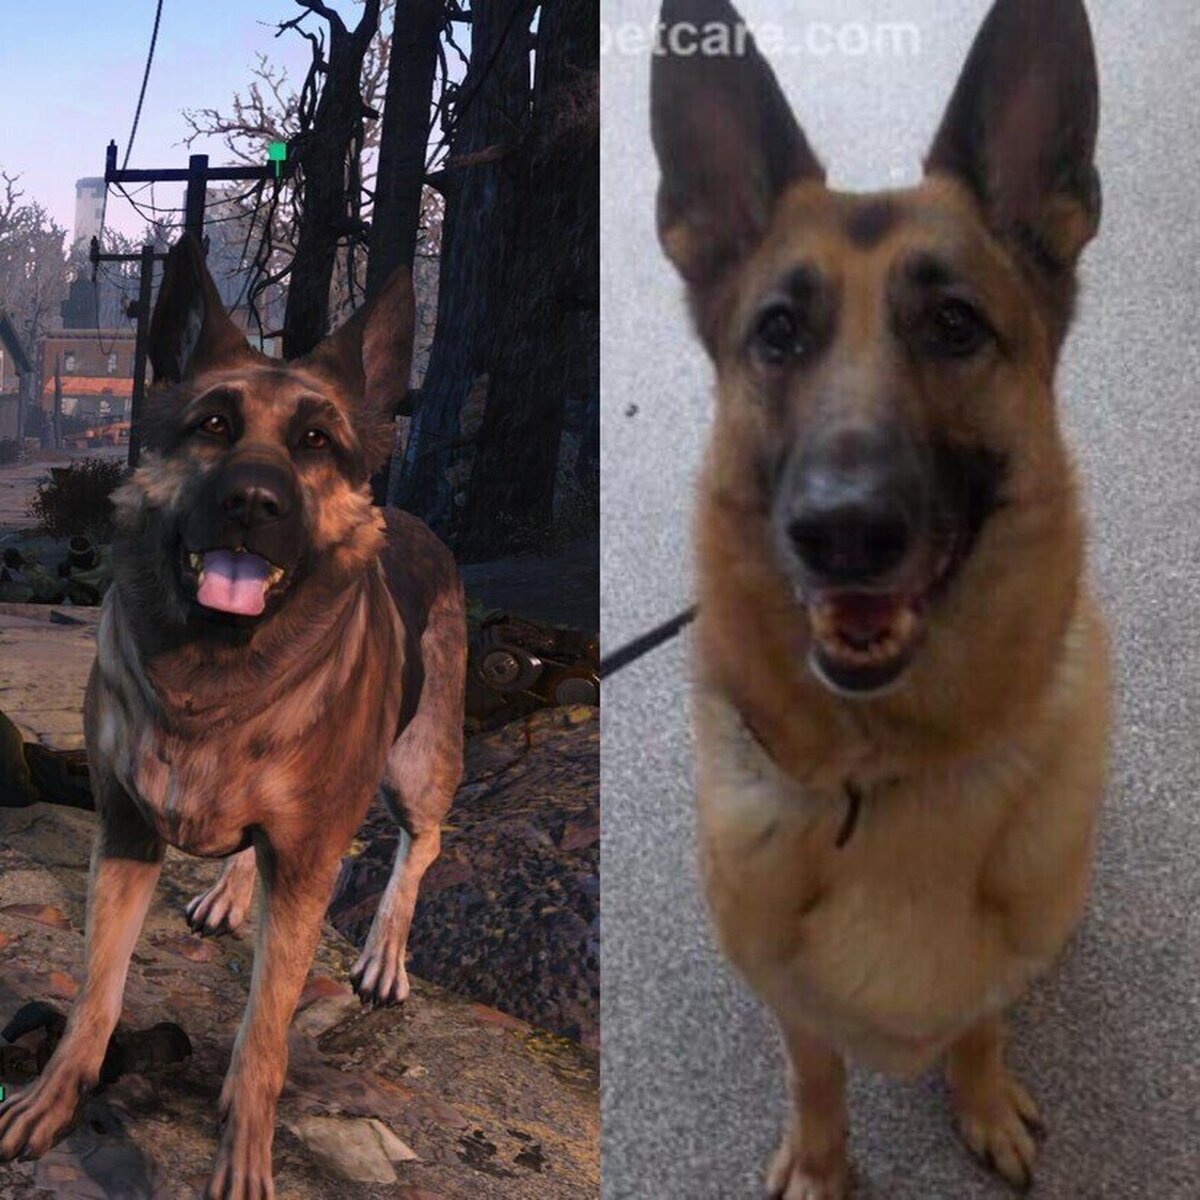 River, el perro modelo de Fallout ha fallecido. Descansa en paz